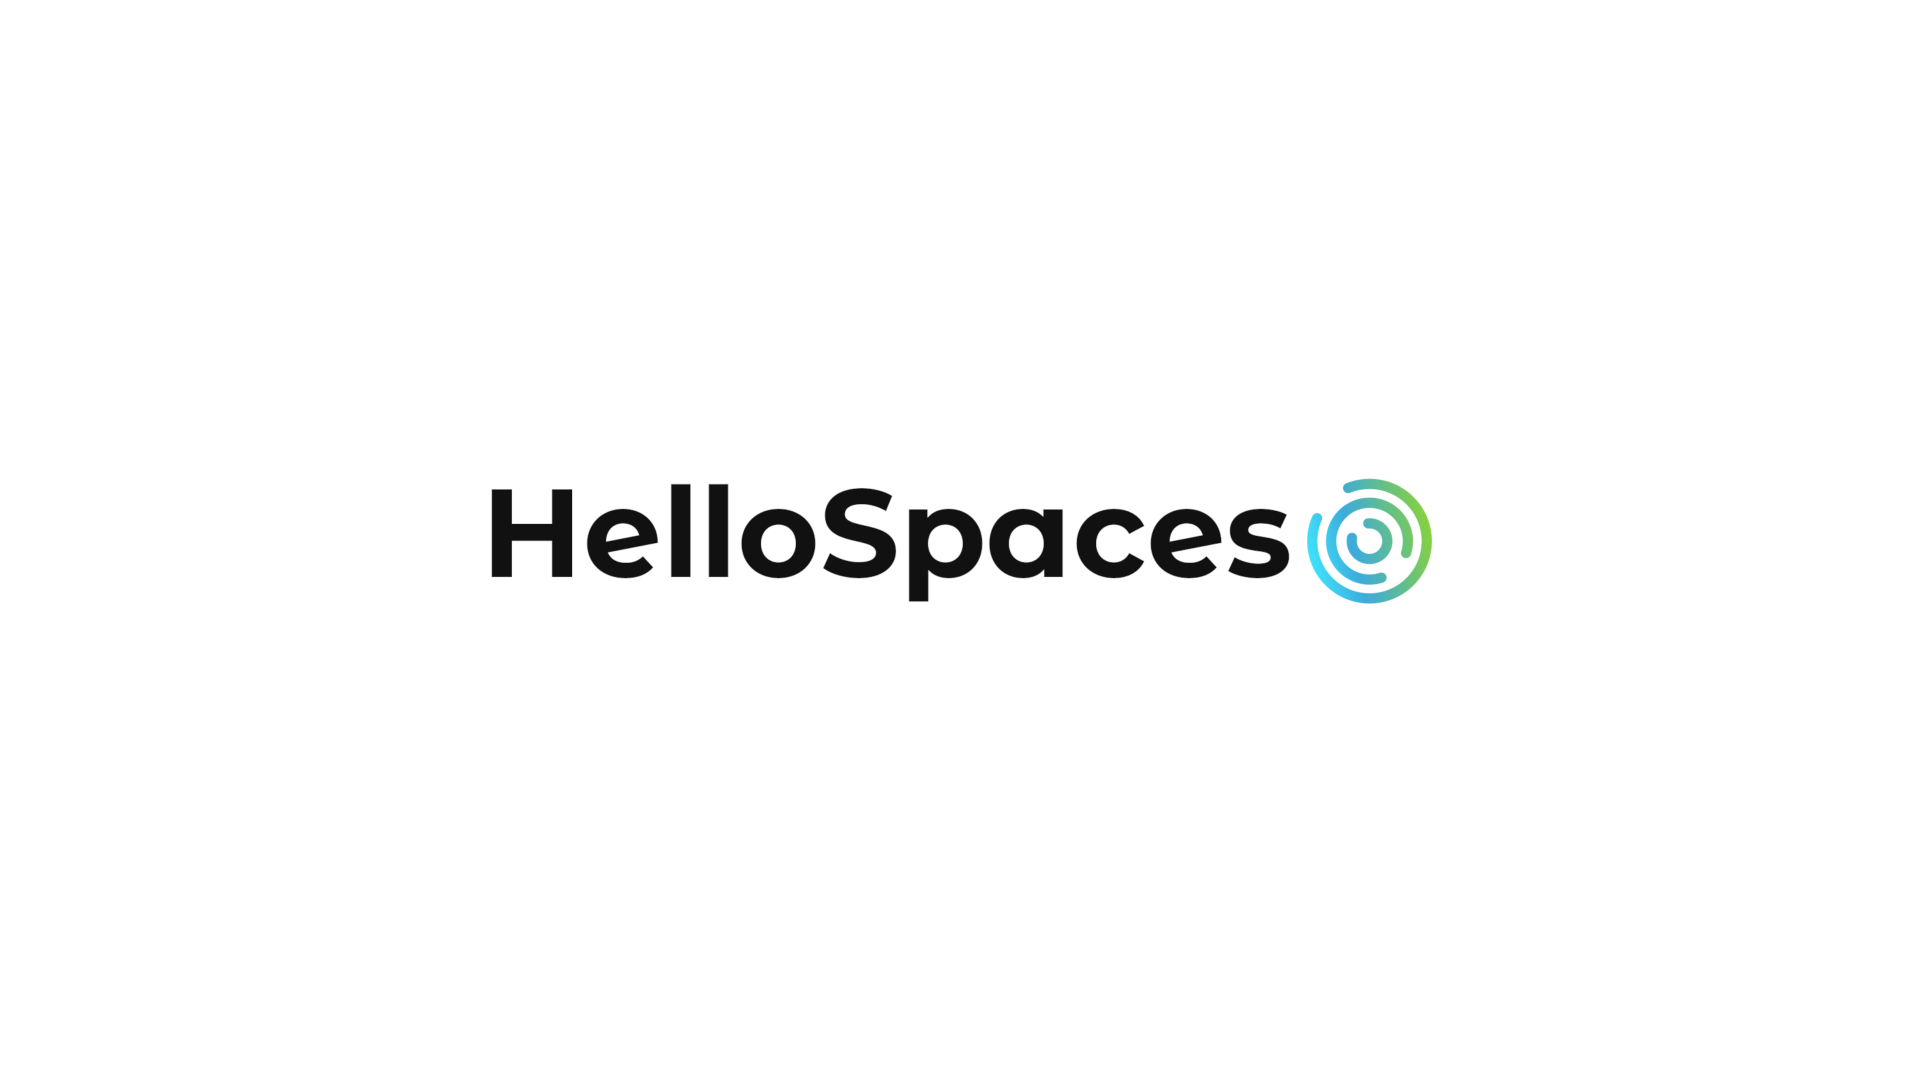 (c) Hellospaces.de